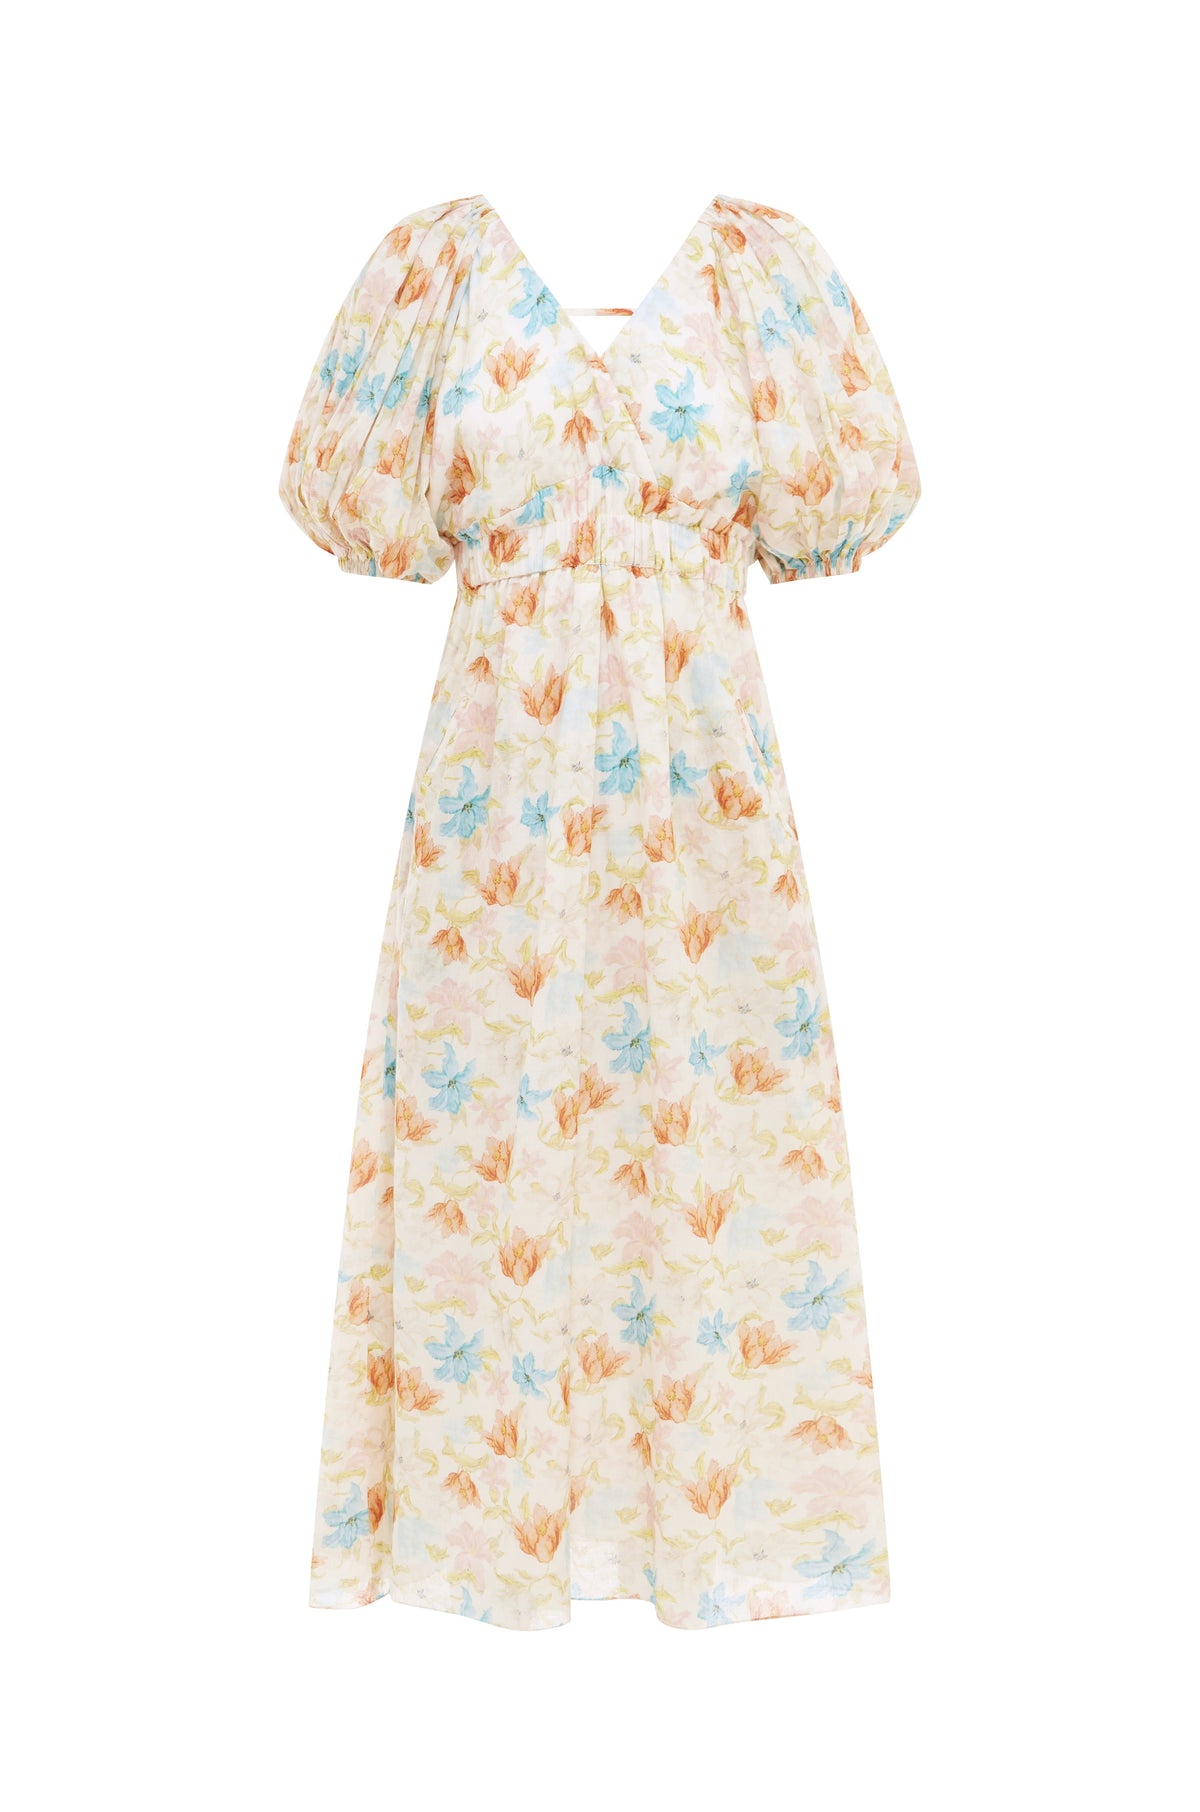 organic cotton floral print midi dress for summer weddings